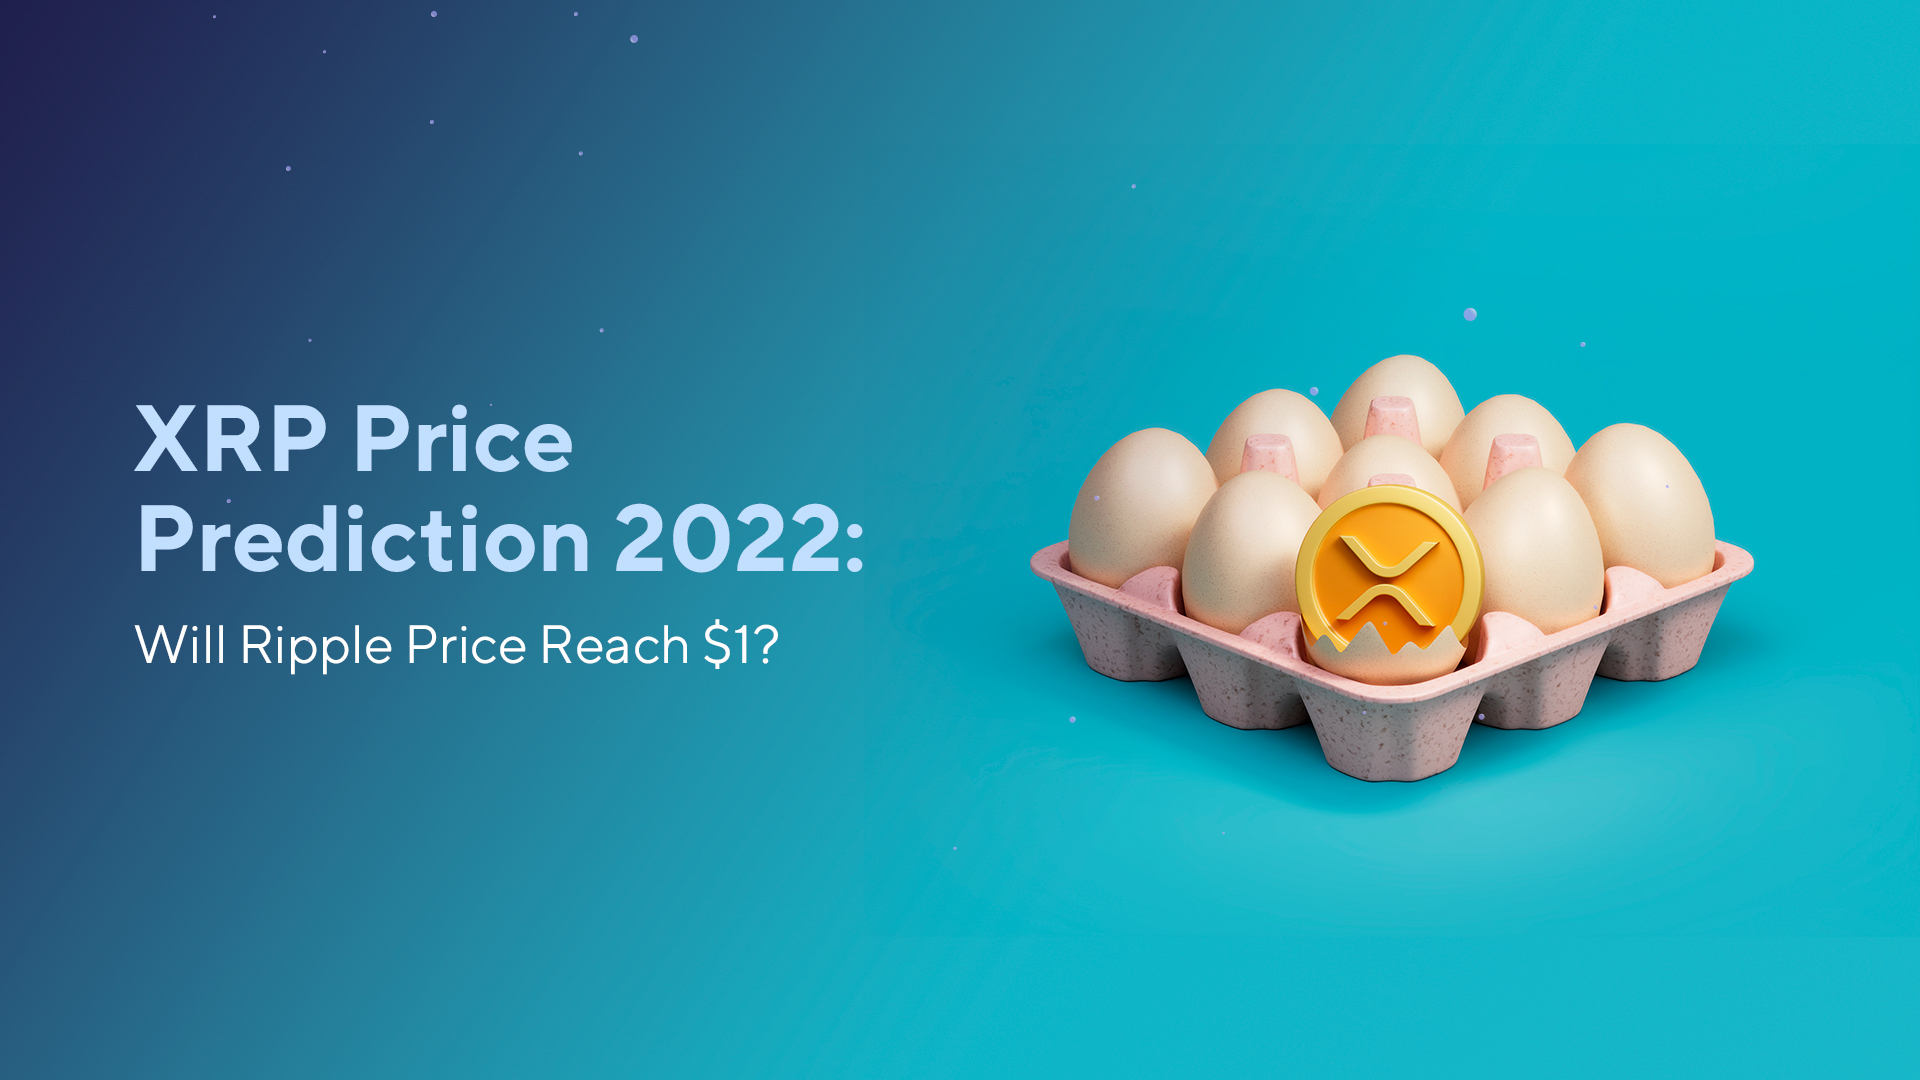 XRP Price Prediction 2022: Will Ripple Price Reach $1?